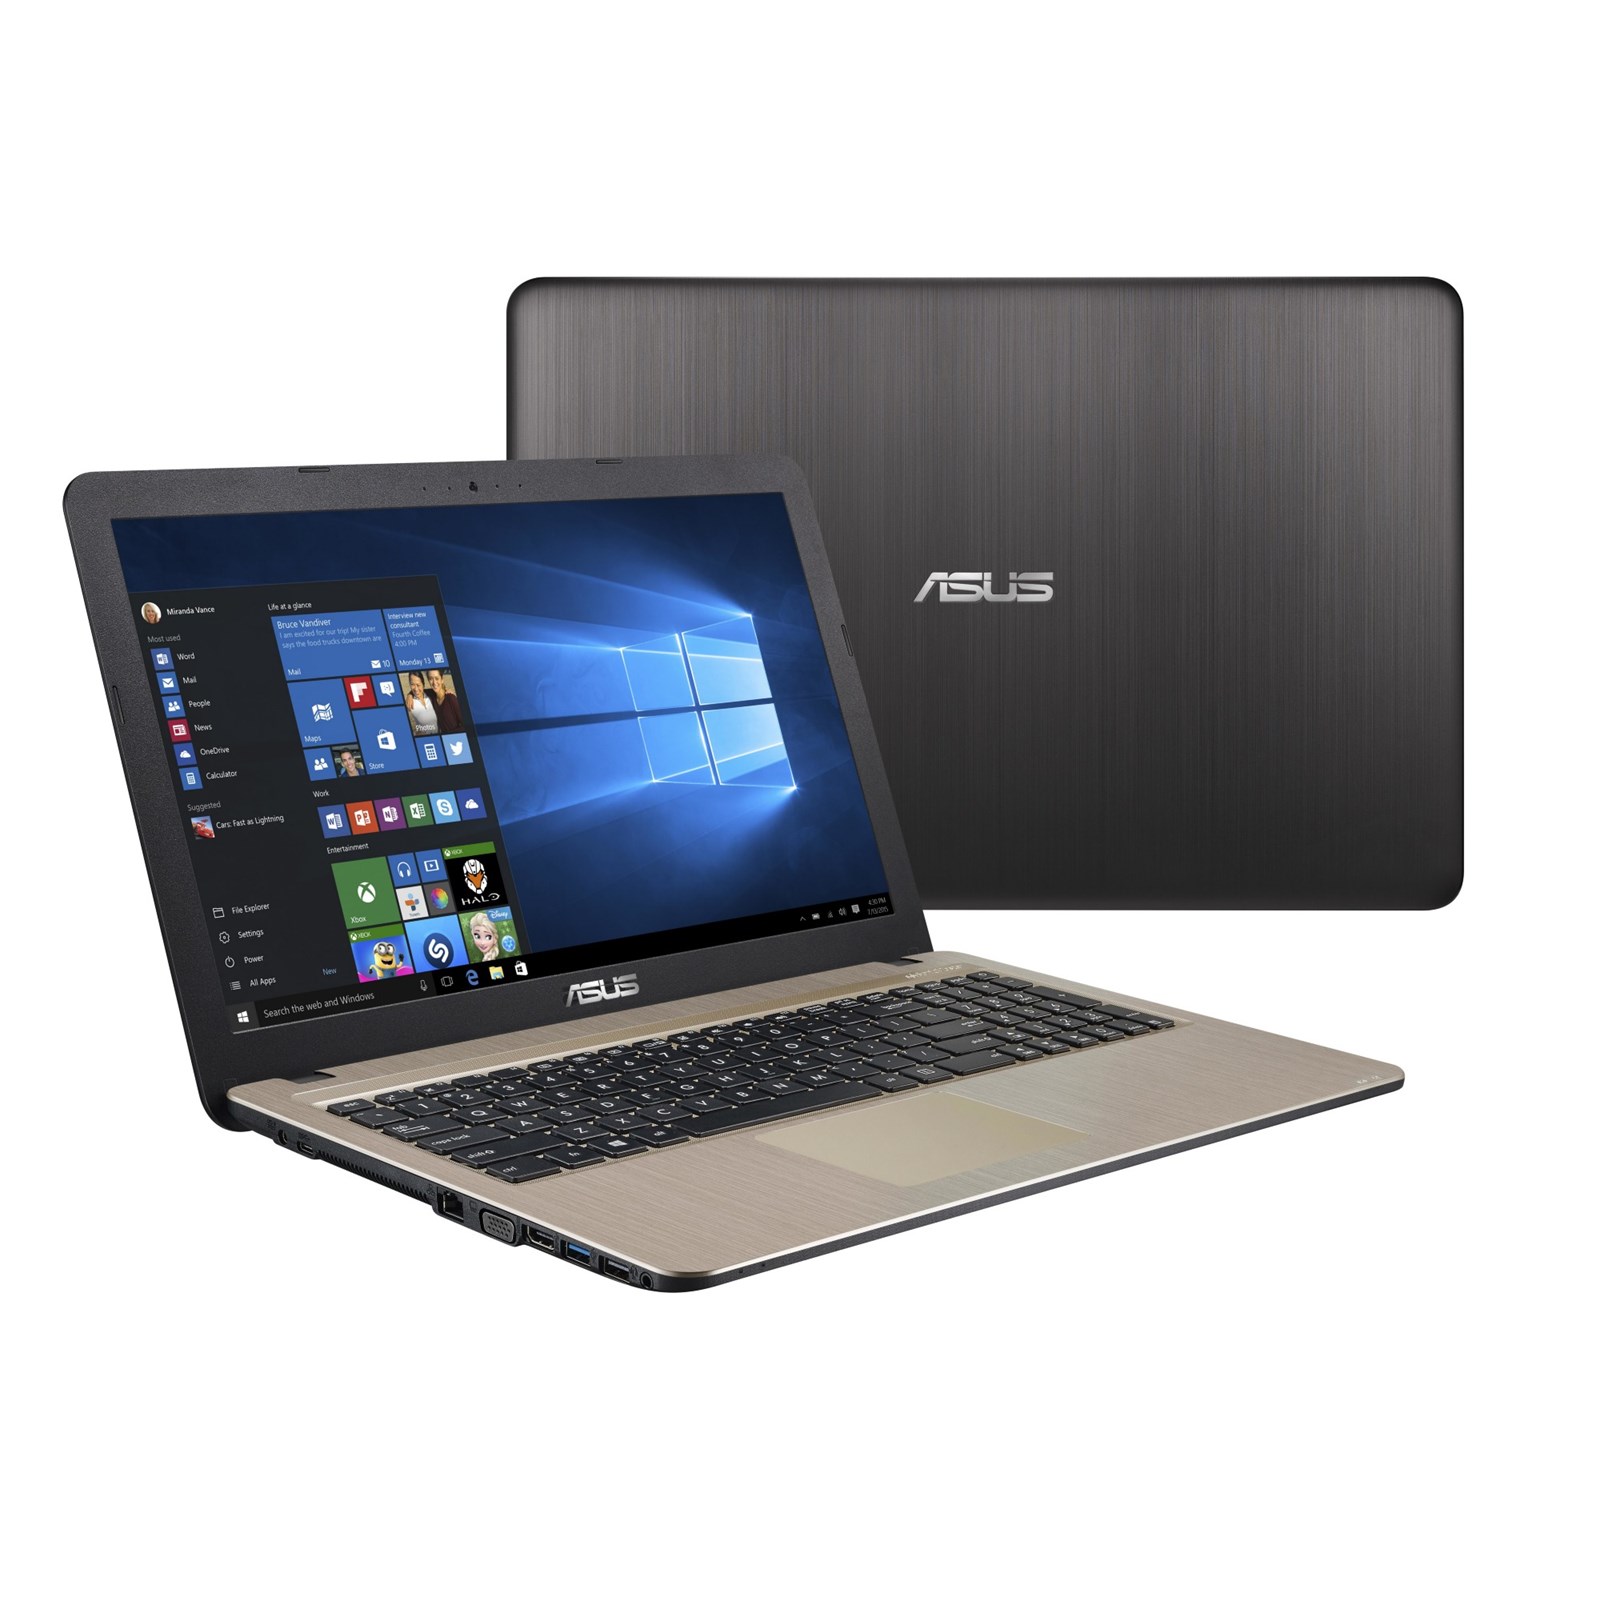 Asus Vivobook X540ua 156 8gb Core I5 Laptop X540ua Dm564r Ccl